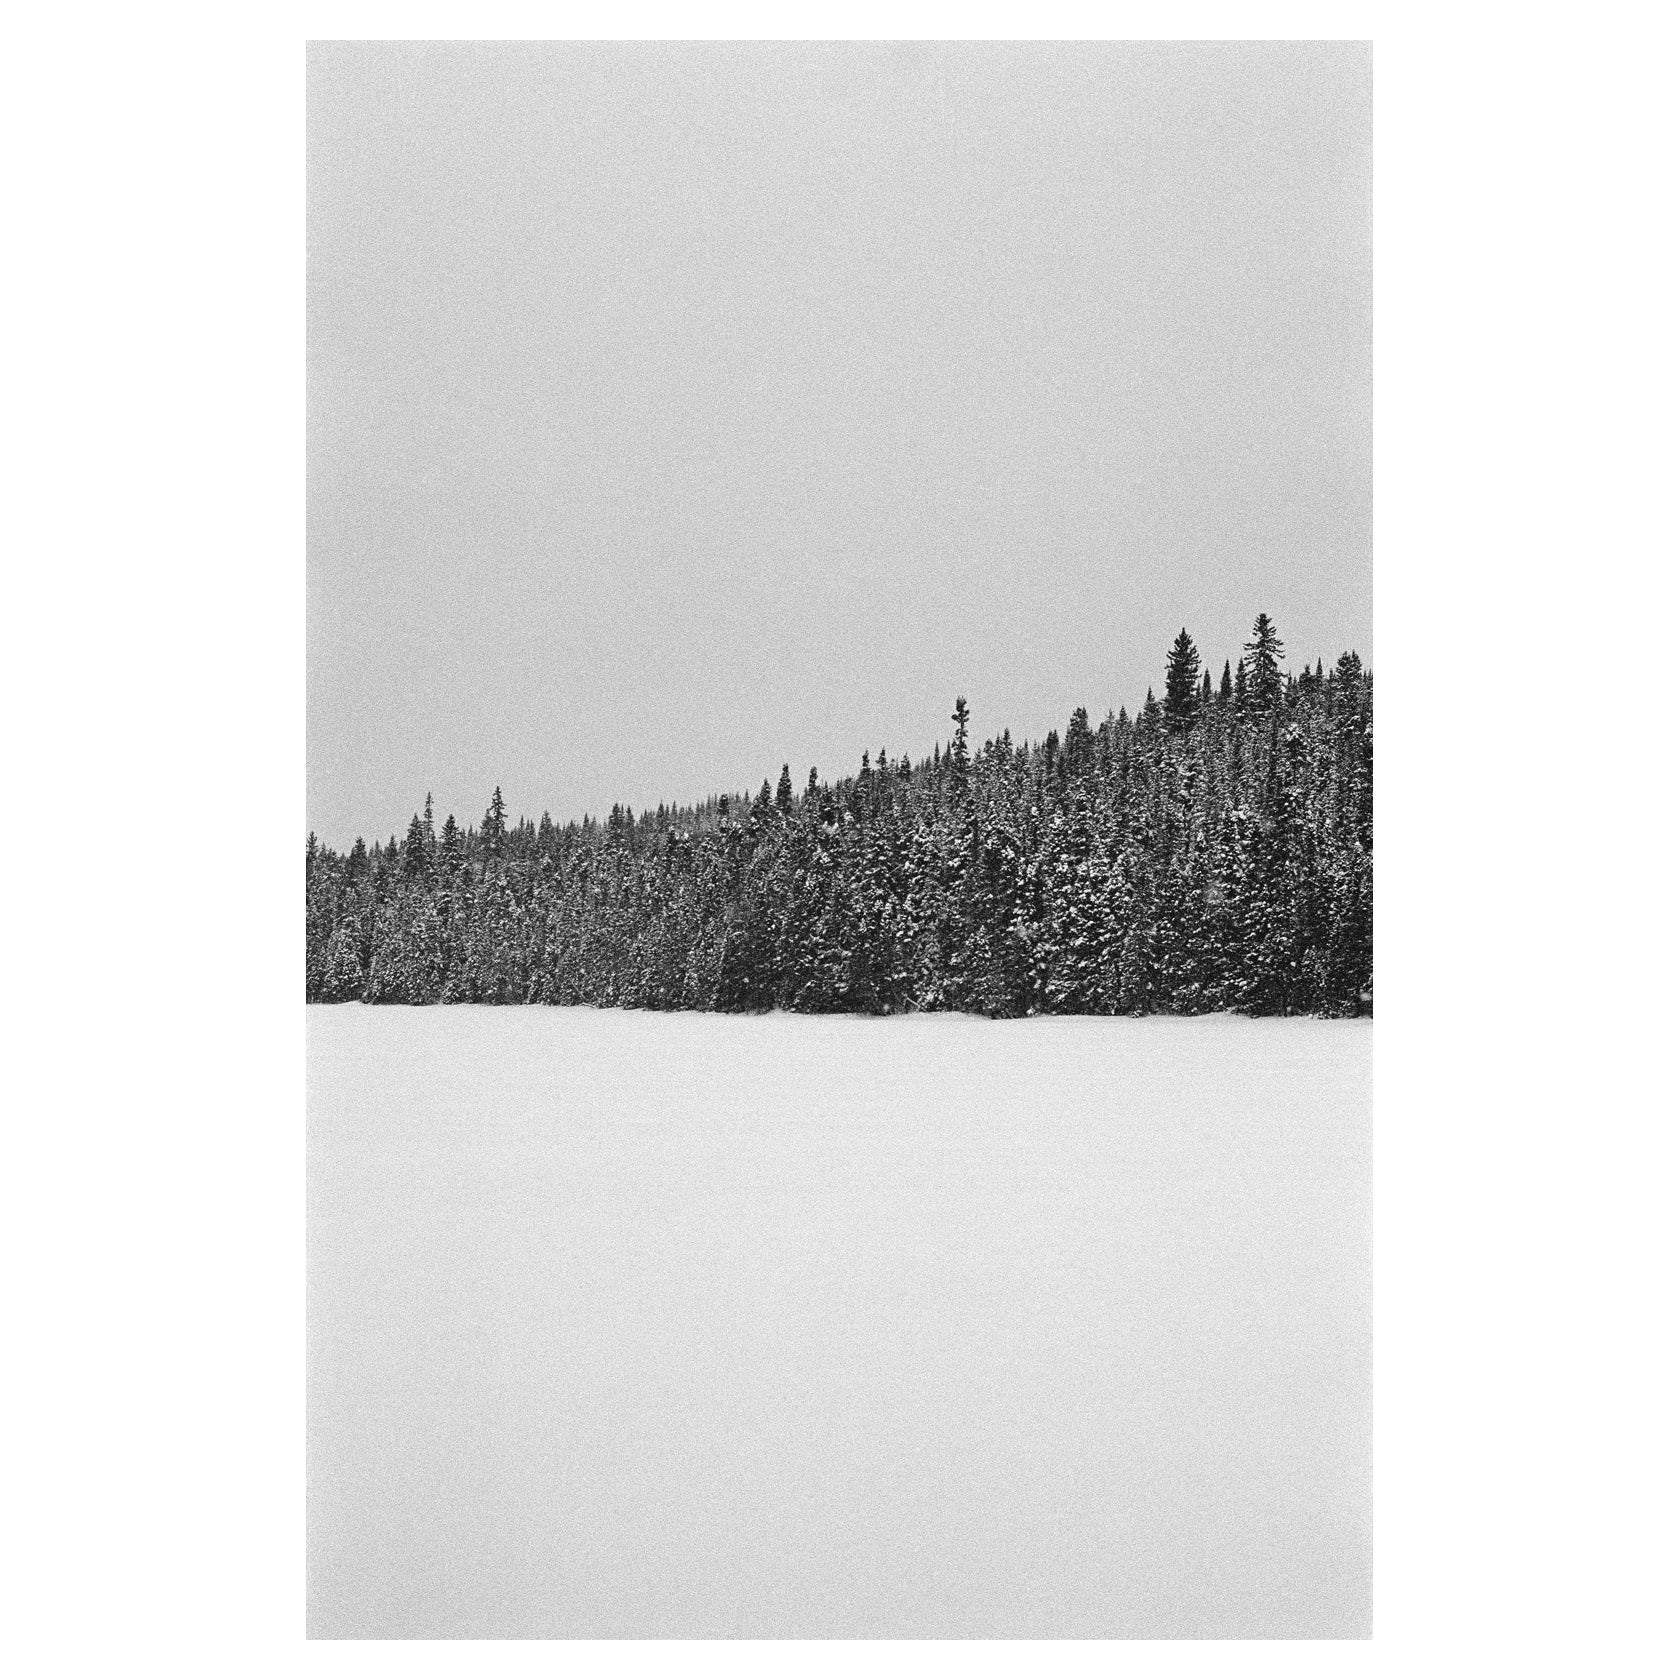 Frédéric Tougas, Strophes Pour L’hiver, Now Here, Edition of 11, Photograph For Sale